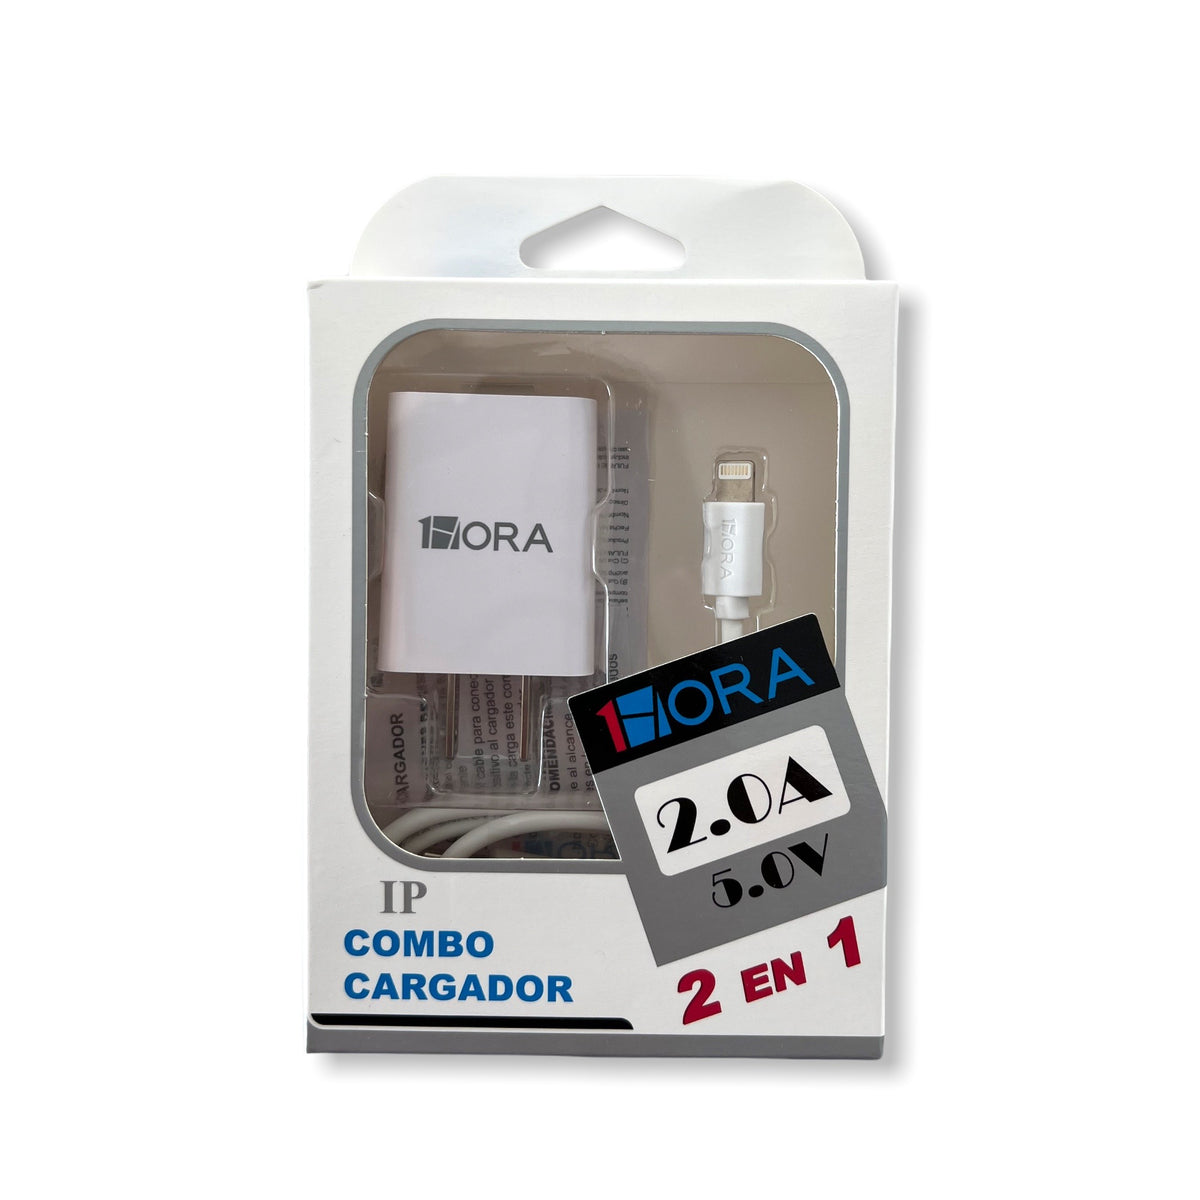 Cargador 1hora pared kit de carga rápido lightning iphone 5 al 13 pro max